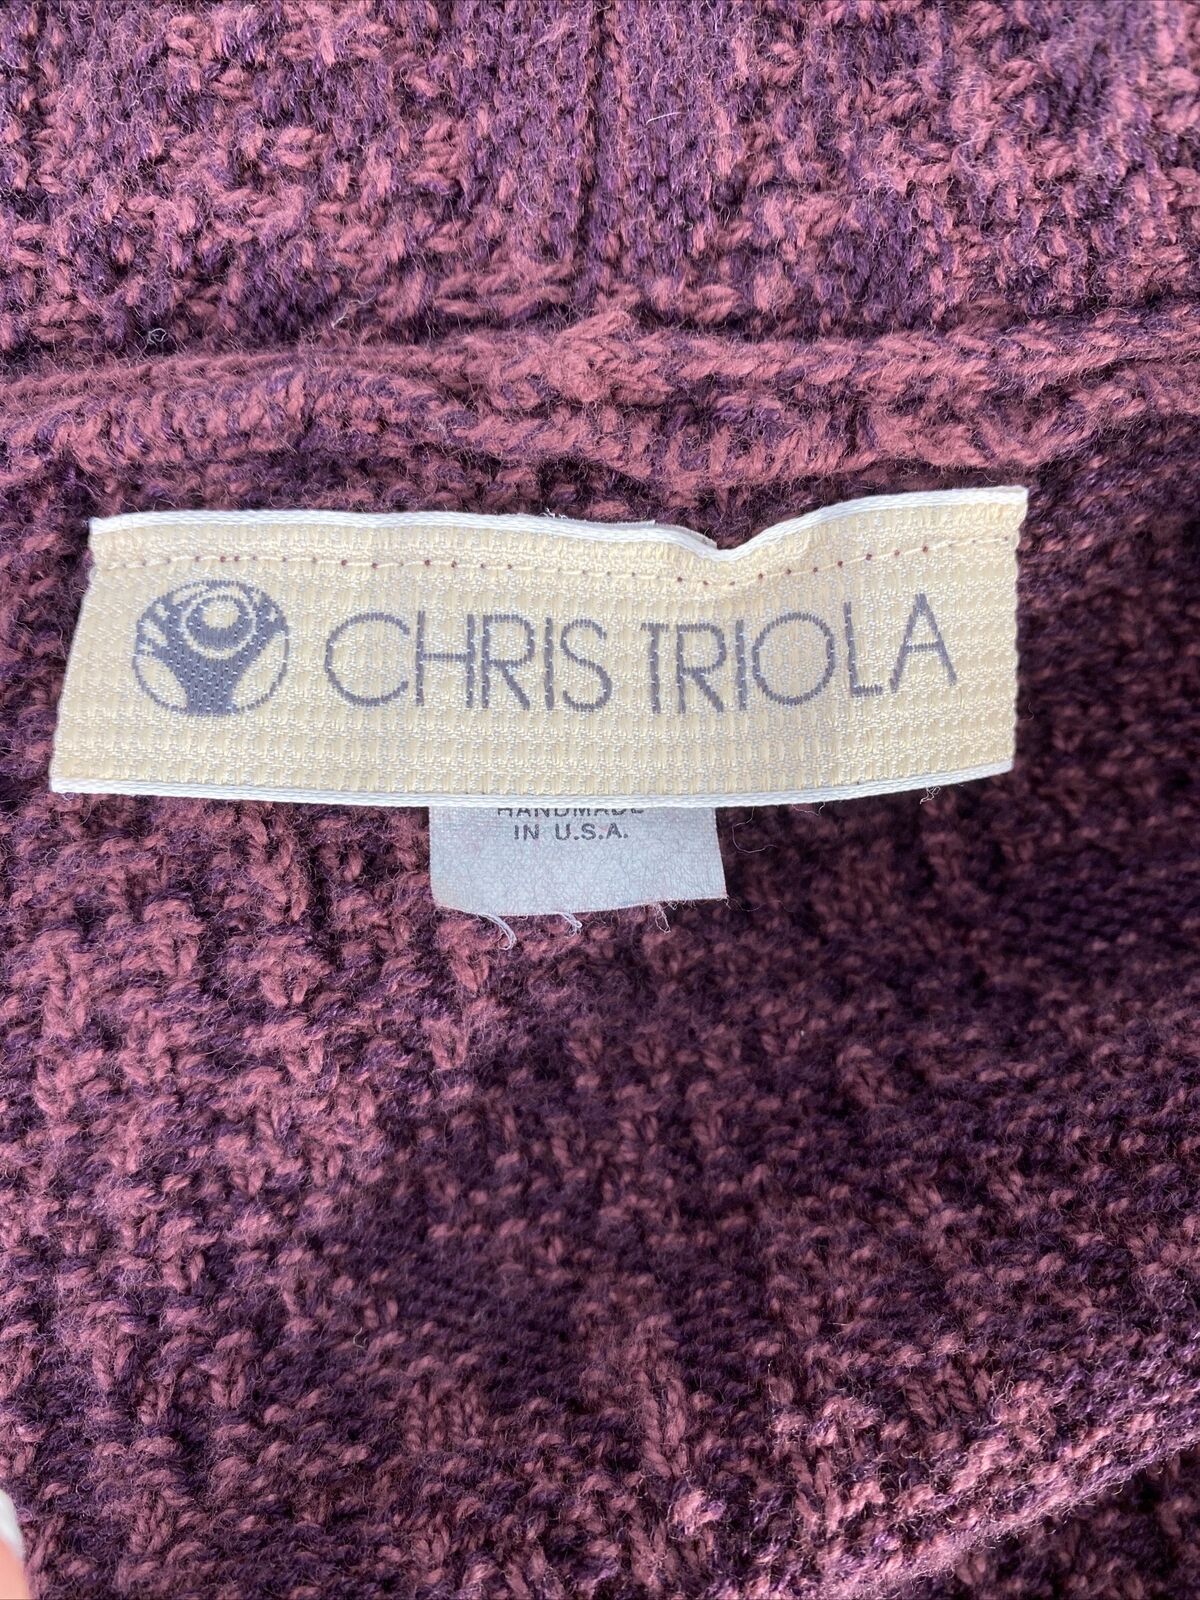 Chris Triola Women's Purple Cotton Open Cardigan Sweater - M